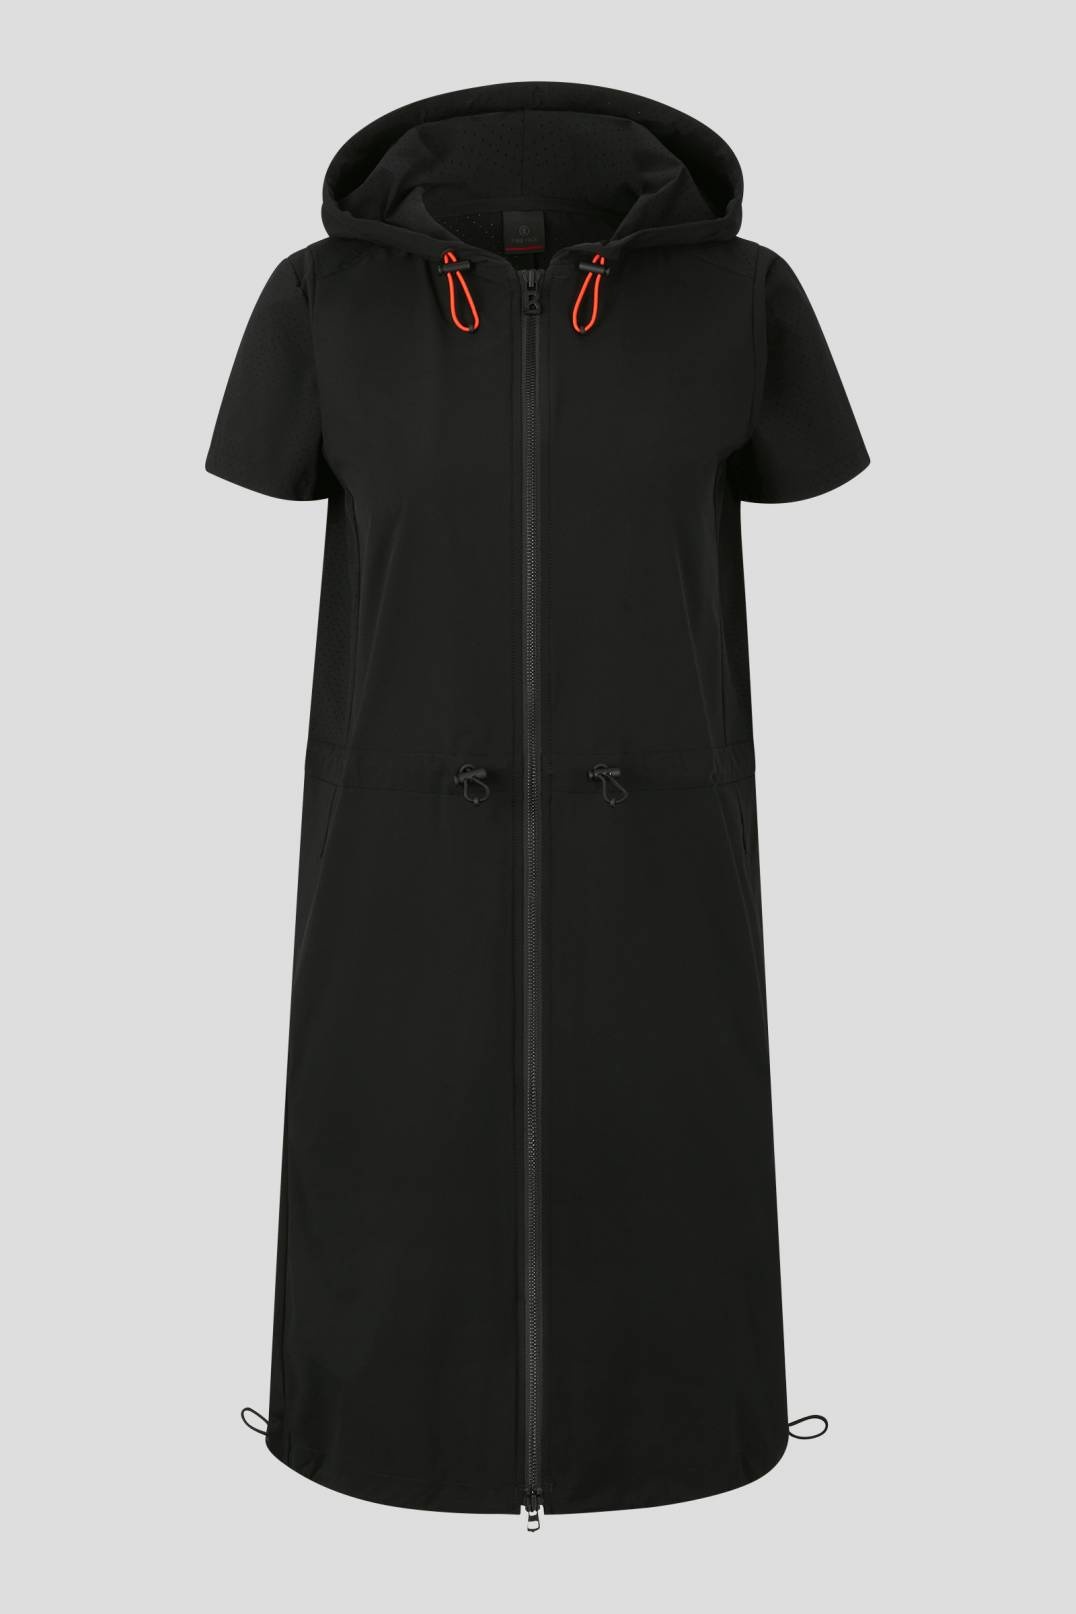 VALENTINA FUNCTIONAL DRESS IN BLACK - 1